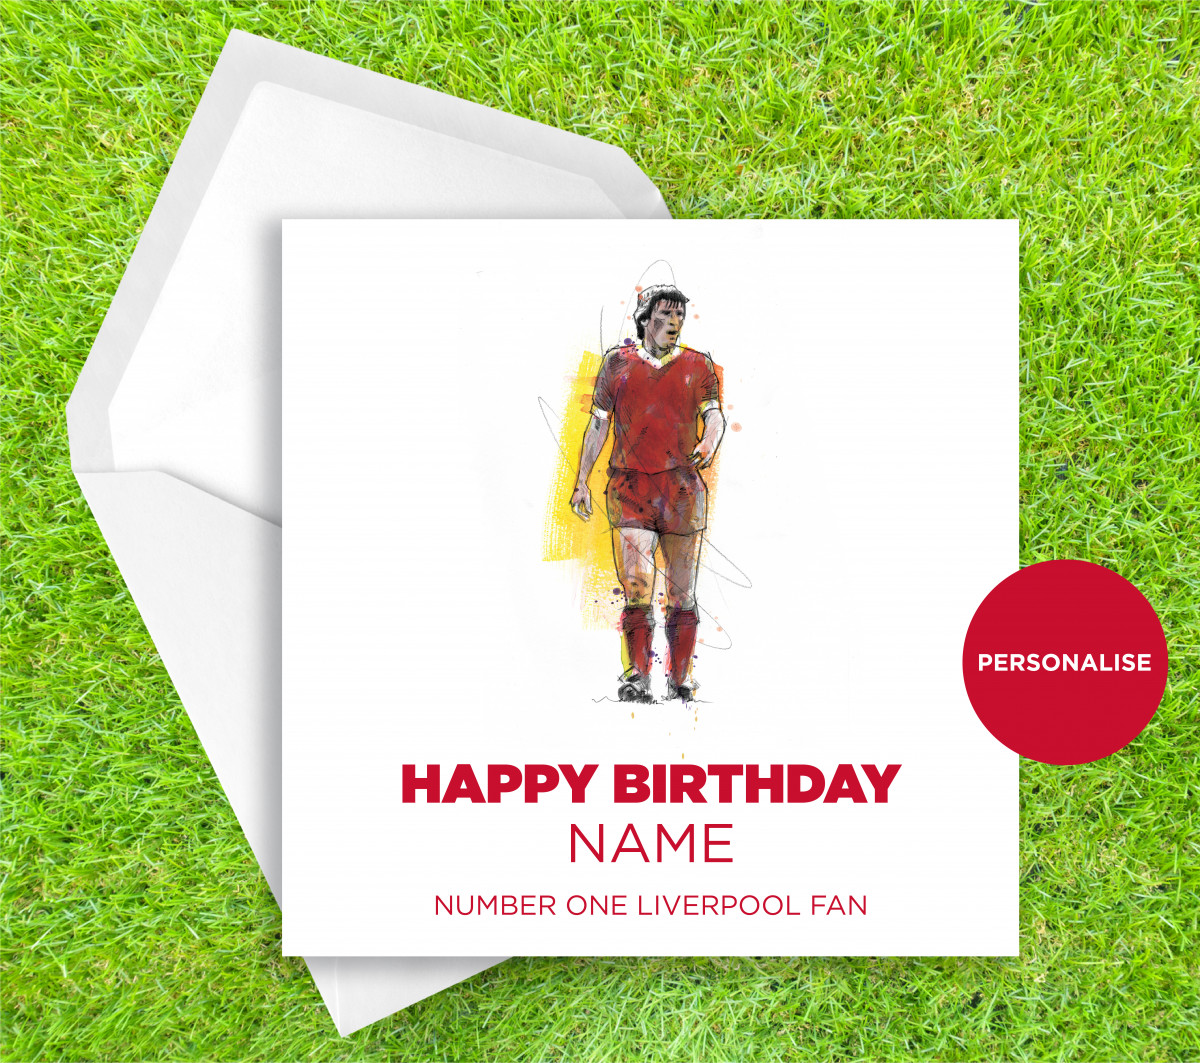 Liverpool FC, Kenny Dalglish, personalised birthday card